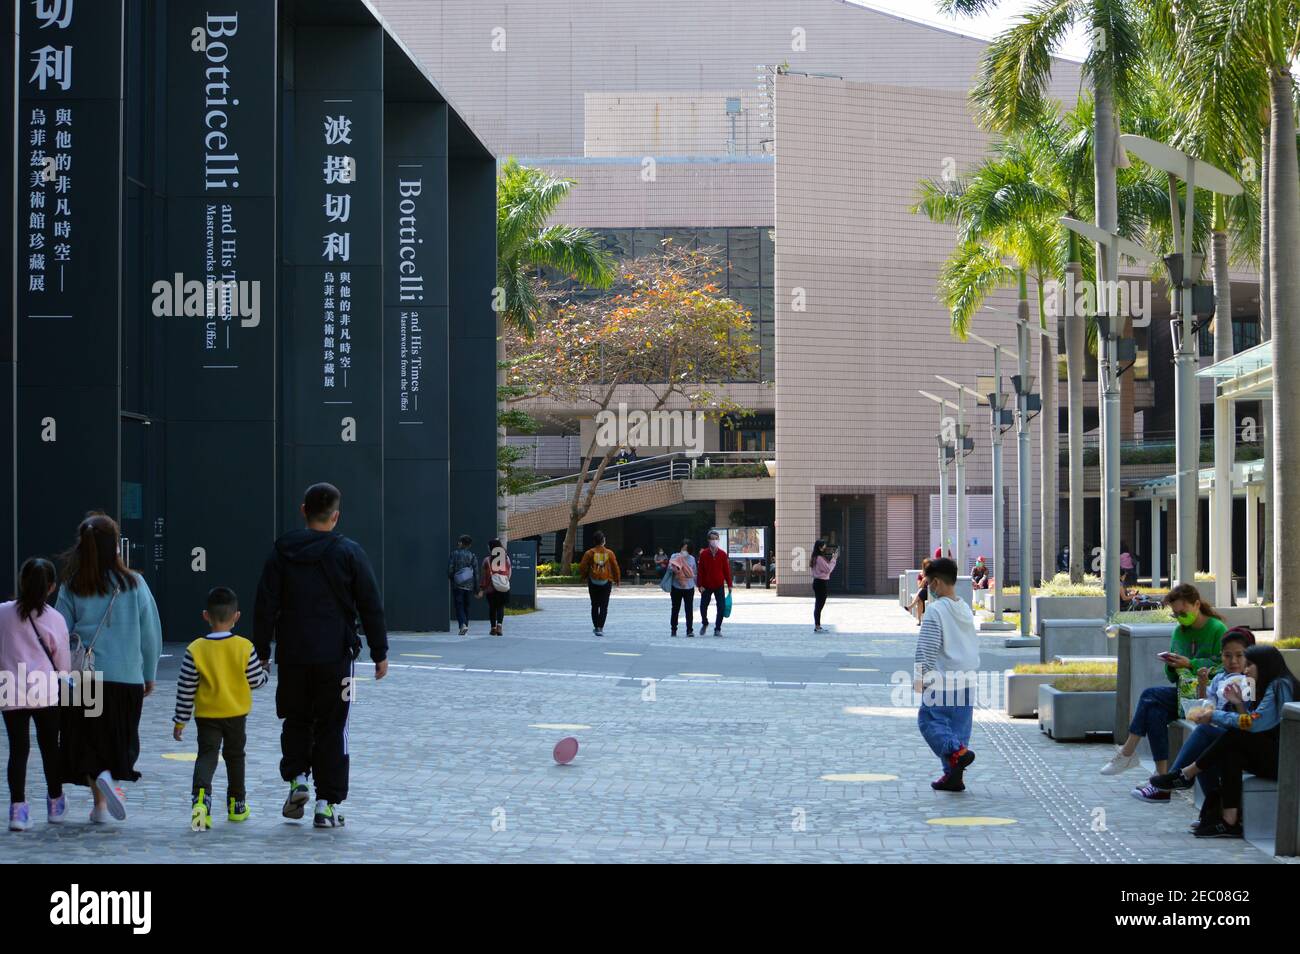 Piazzale del Museo d'Arte di Hong Kong (香港藝術館) a Tsim Sha Tsui, Kowloon, febbraio 2021 Foto Stock